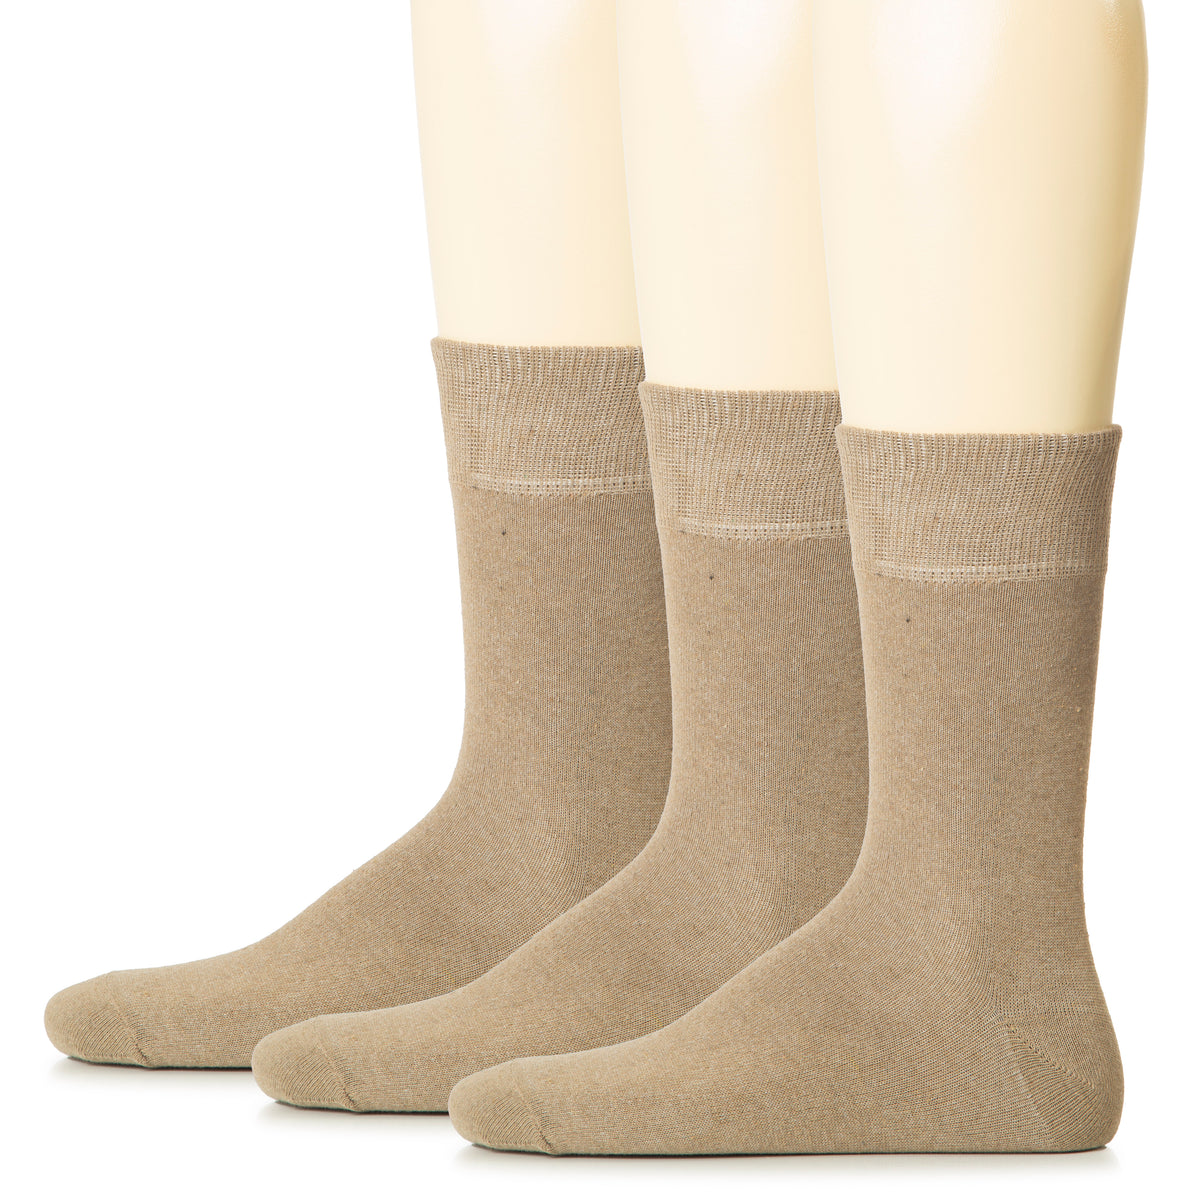 Hugh Ugoli Men Cotton Dress Socks XL / L / M / S Sizes, 3 Pairs | Shoe Size: 6-8 | Dark Beige